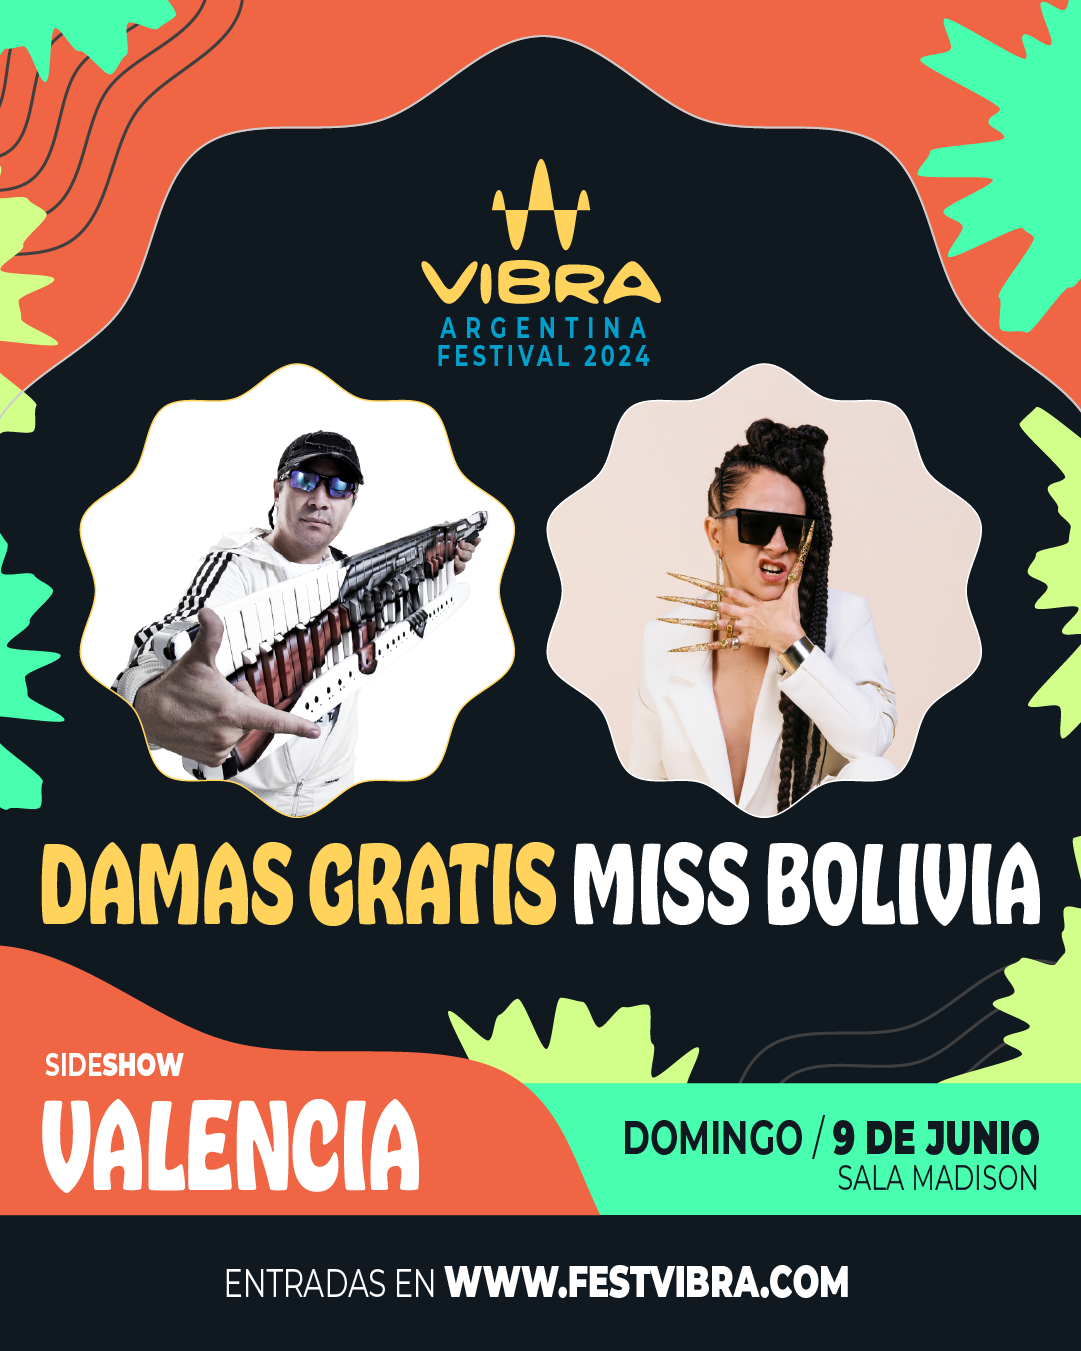 VIBRA ARGENTINA FESTIVAL 2024 en VALENCIA, sala Madison, Domingo 9 Junio Damas Gratis y Miss Bolivia. Entradas y Info: www.festvibra.com